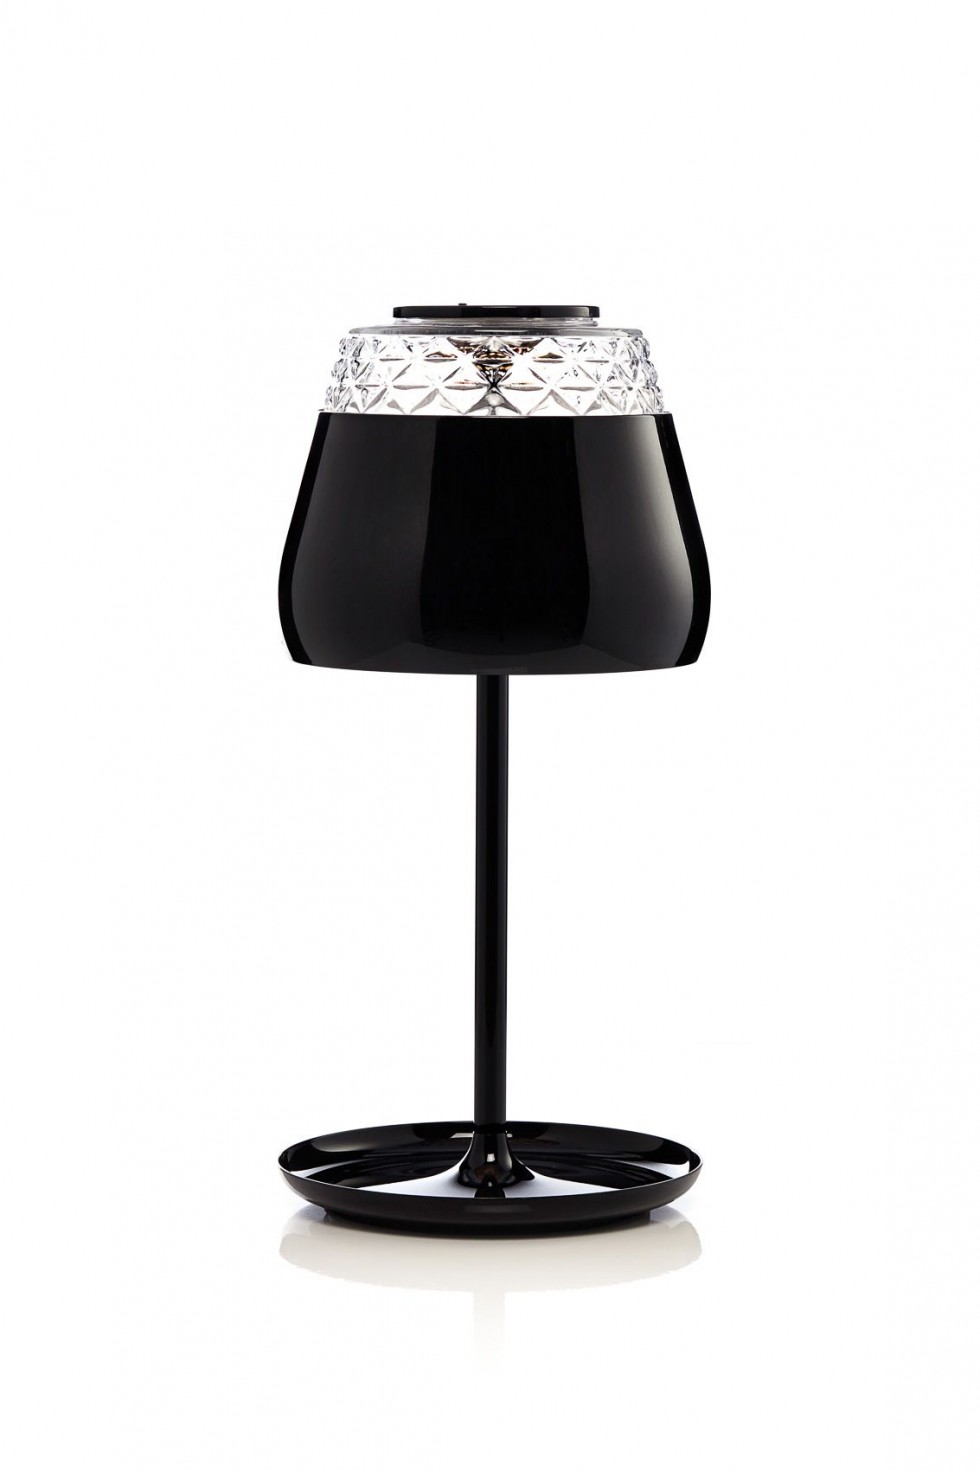 Ultimate Design of Lighting by Marcel Wanders table lamp